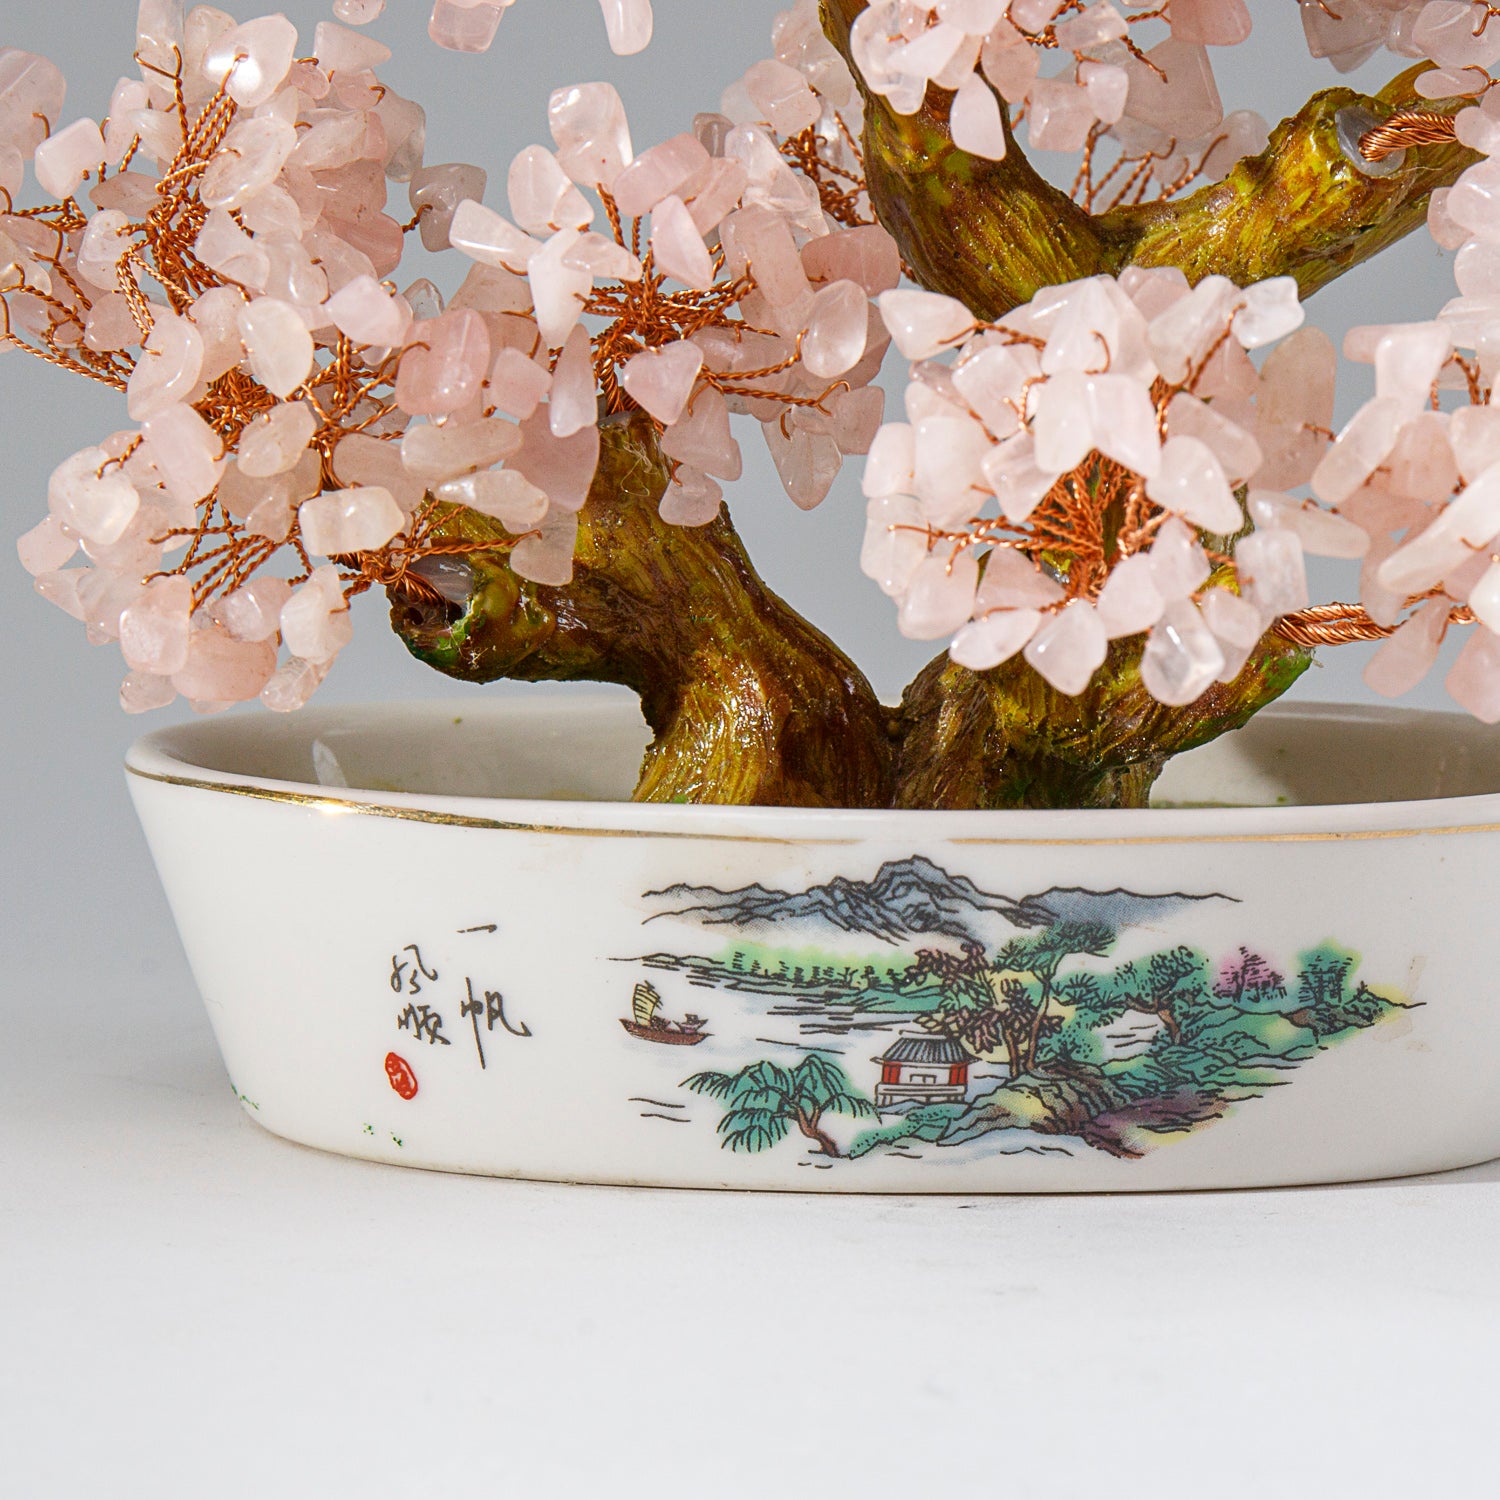 Genuine Rose Quartz Gemstone Bonsai Tree in Oval Ceramic Pot (7” Tall)